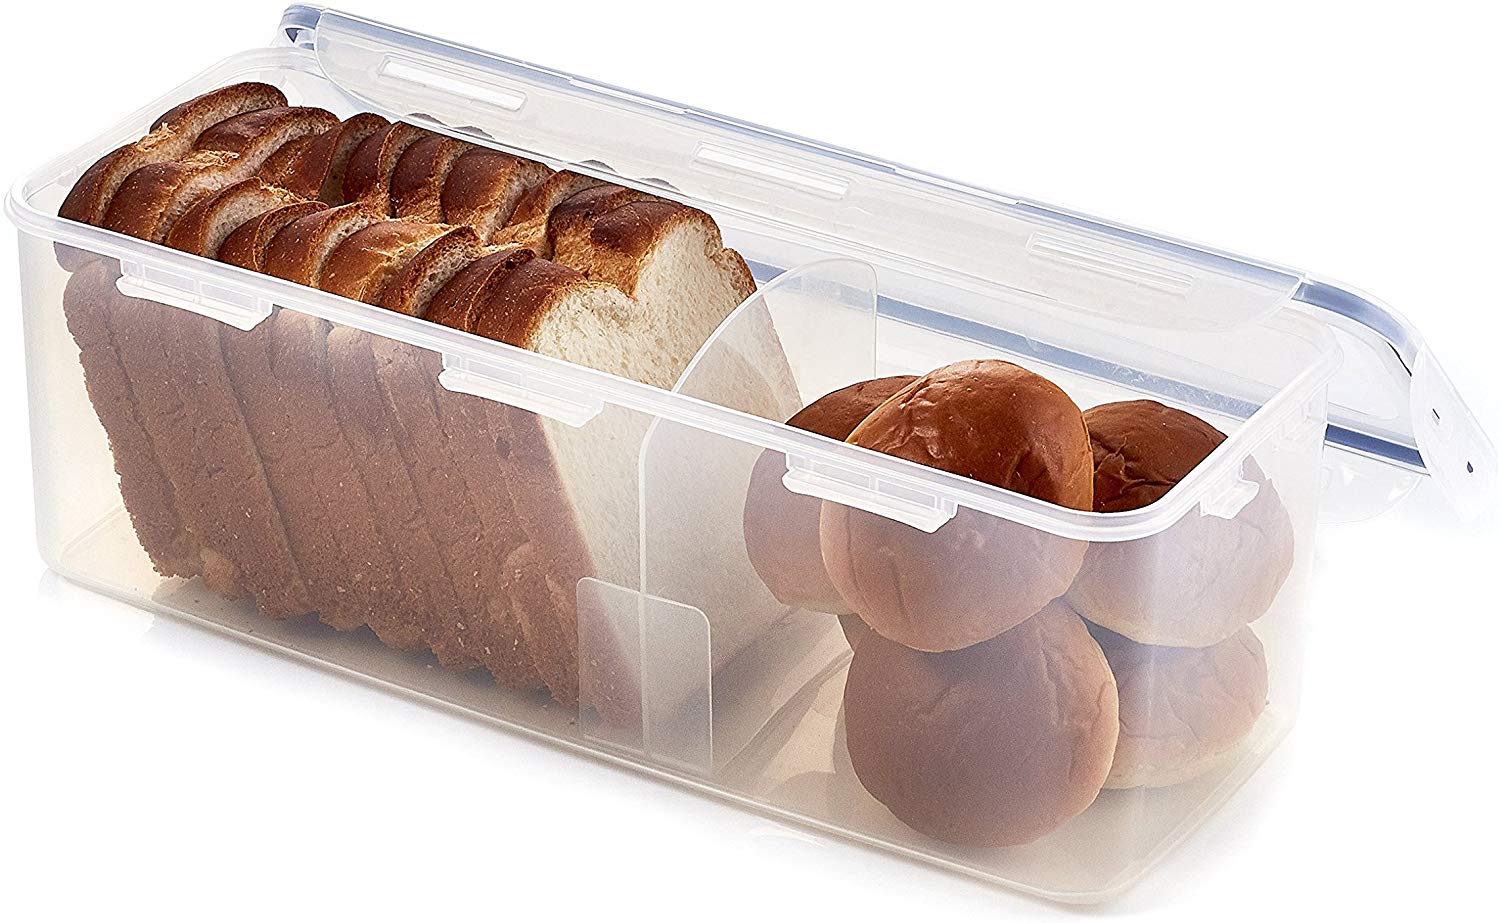 LOCK & LOCK Airtight Rectangular Food Storage Container with Divider, Bread Box $9.43 (REG $14.43)